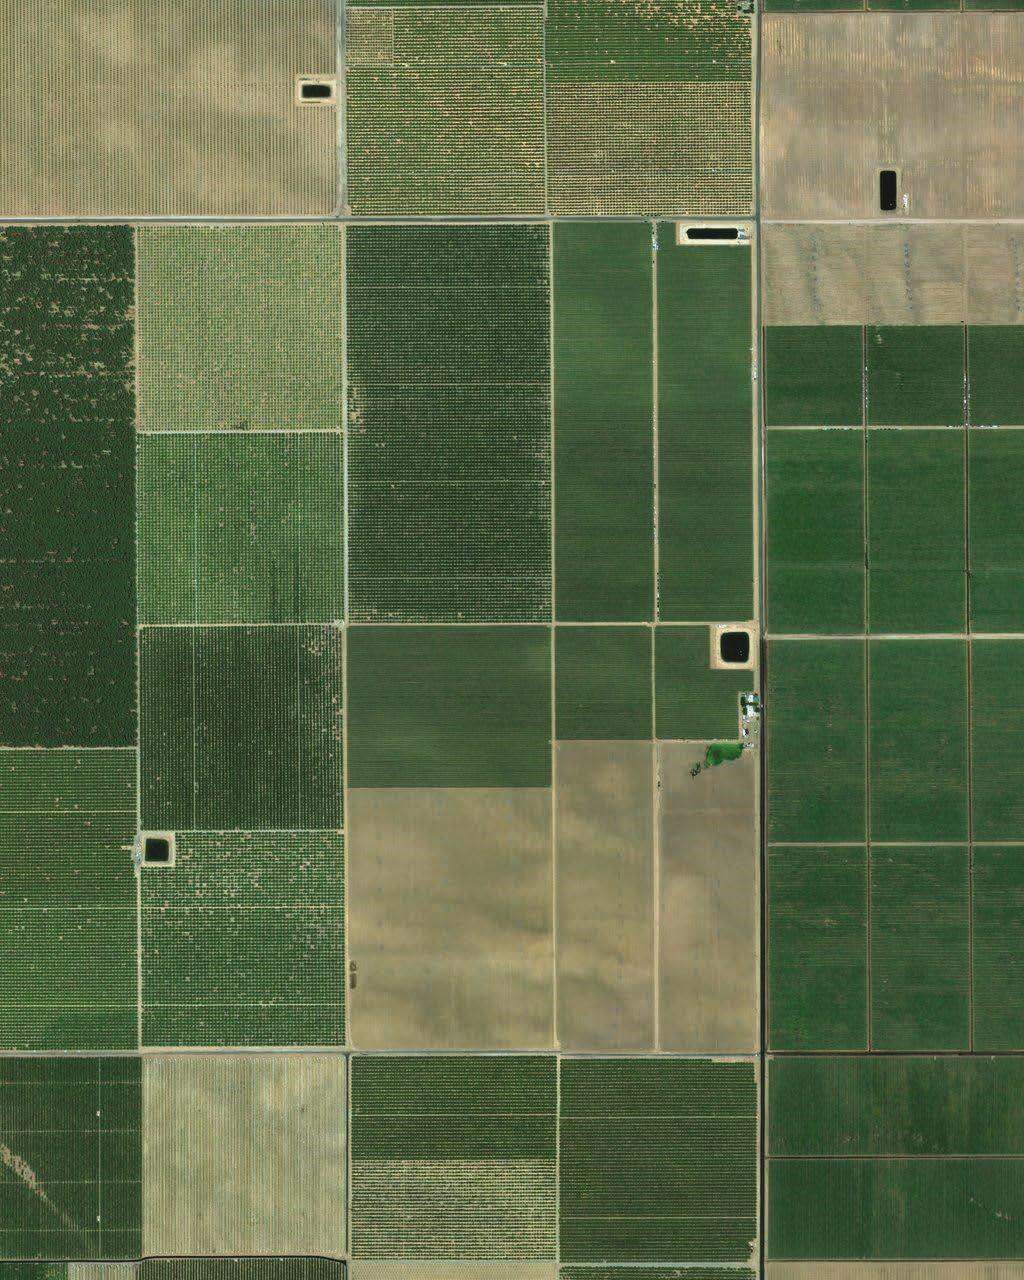 SOILS MAP 119 10' 53'' W Irrigated Capability Class Kern County, California, Northwestern Part 119 9' 54'' W 302500 302700 302900 303100 303300 303500 303700 303900 35 37' 57'' N 35 37' 57'' N